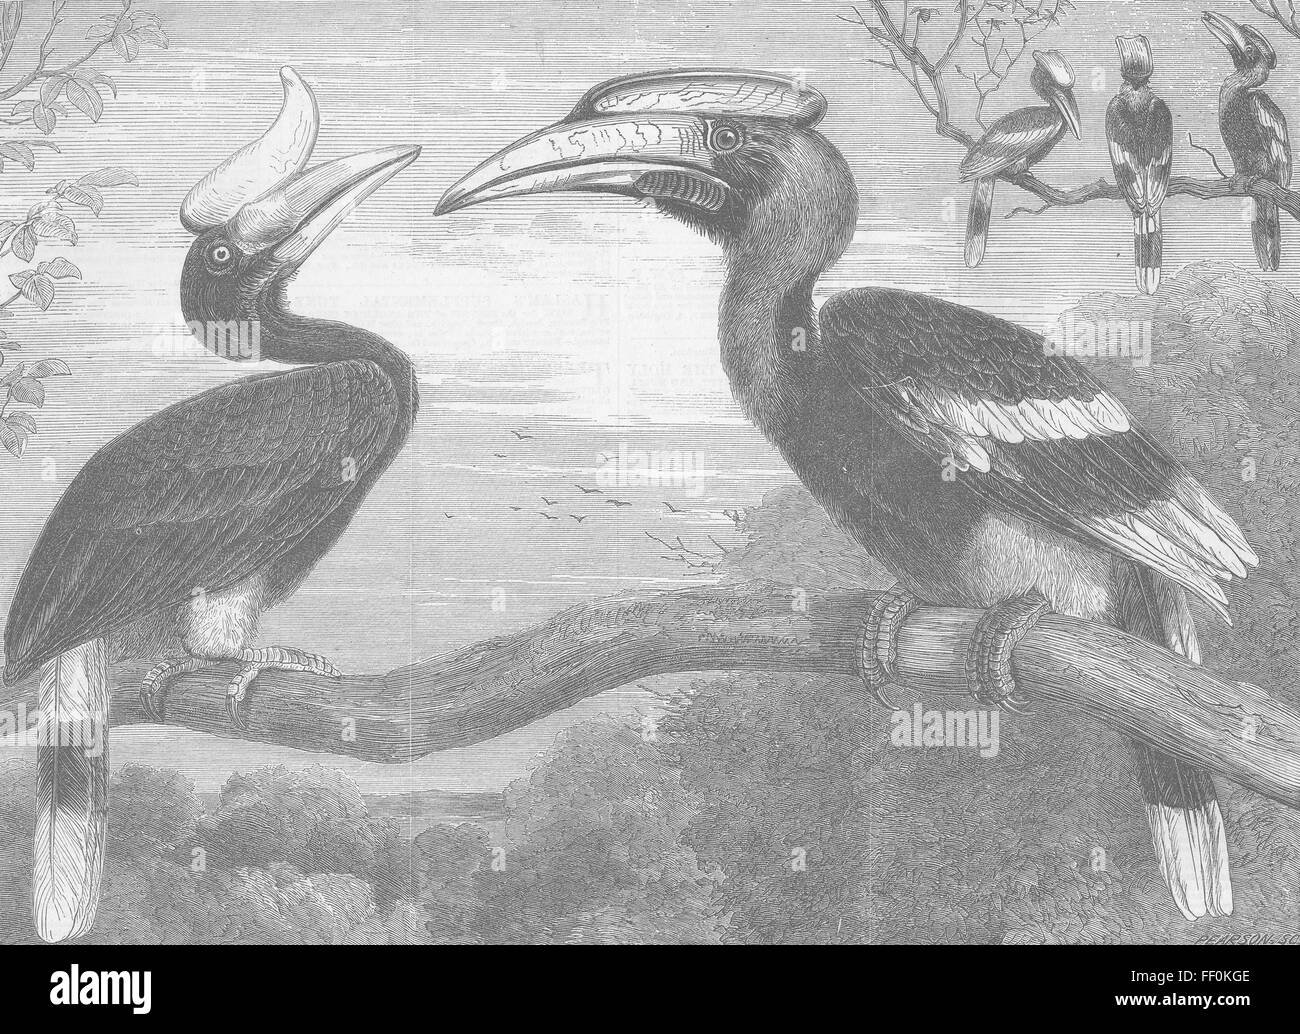 LONDON Hornbills, Gdns of, Regent's Park 1864. Illustrated London News Stock Photo